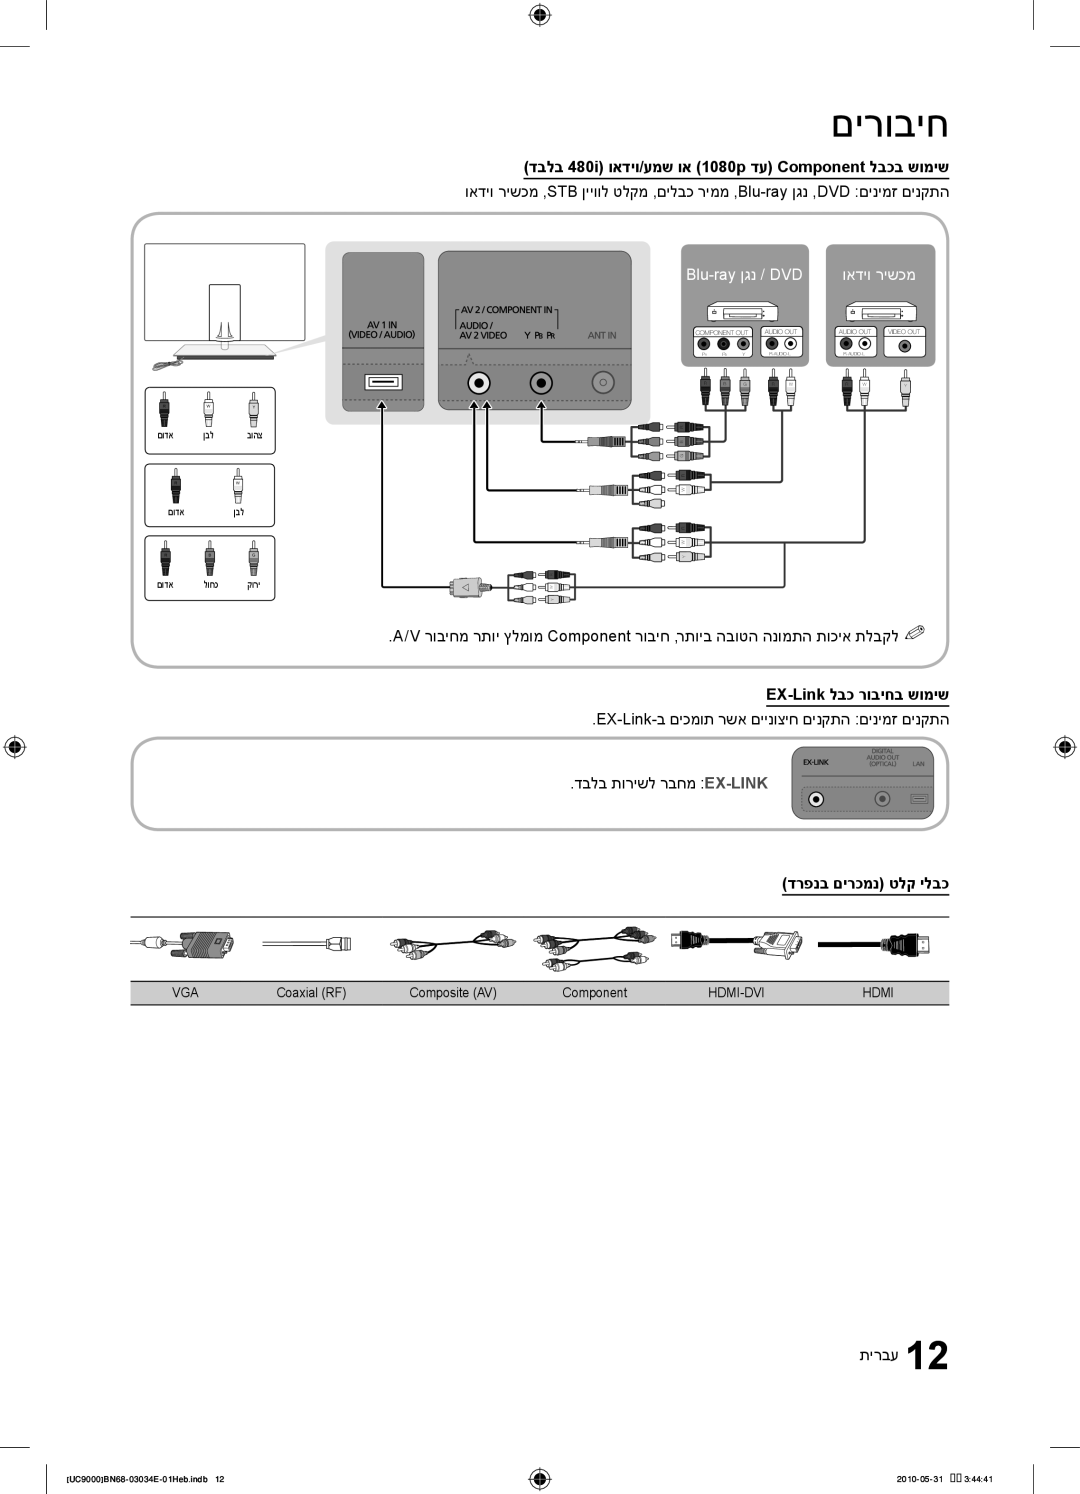 Samsung UA55C9000SRXSQ manual דבלב 480i ואדיו/עמש וא 1080p דע Component לבכב שומיש, EX-Link לבכ רוביחב שומיש 